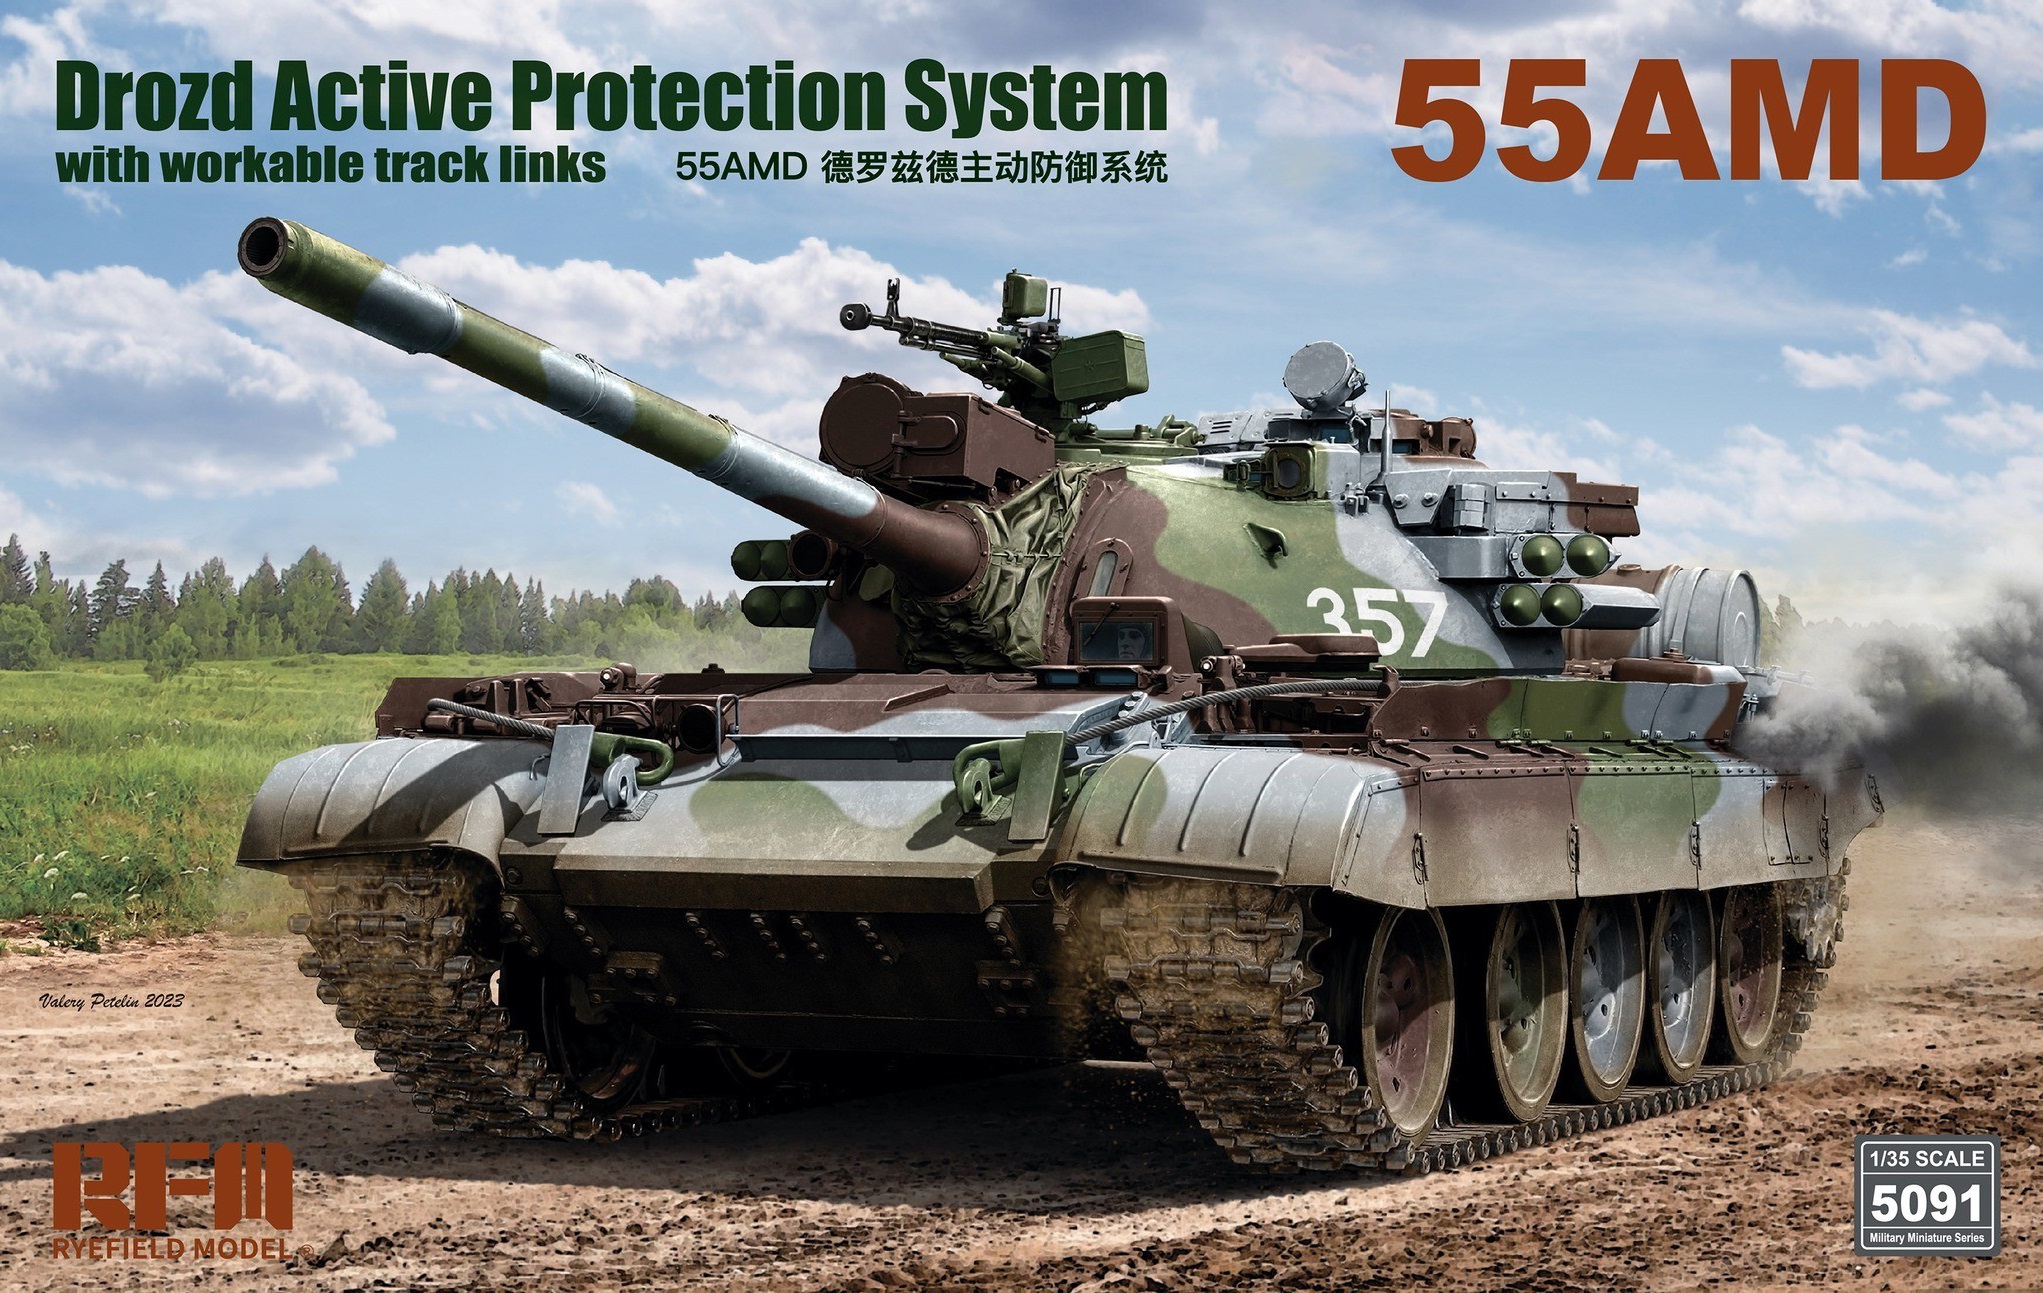 RM-5091  техника и вооружение  Танк-55AMD Drozd APS w/workable track links  (1:35)